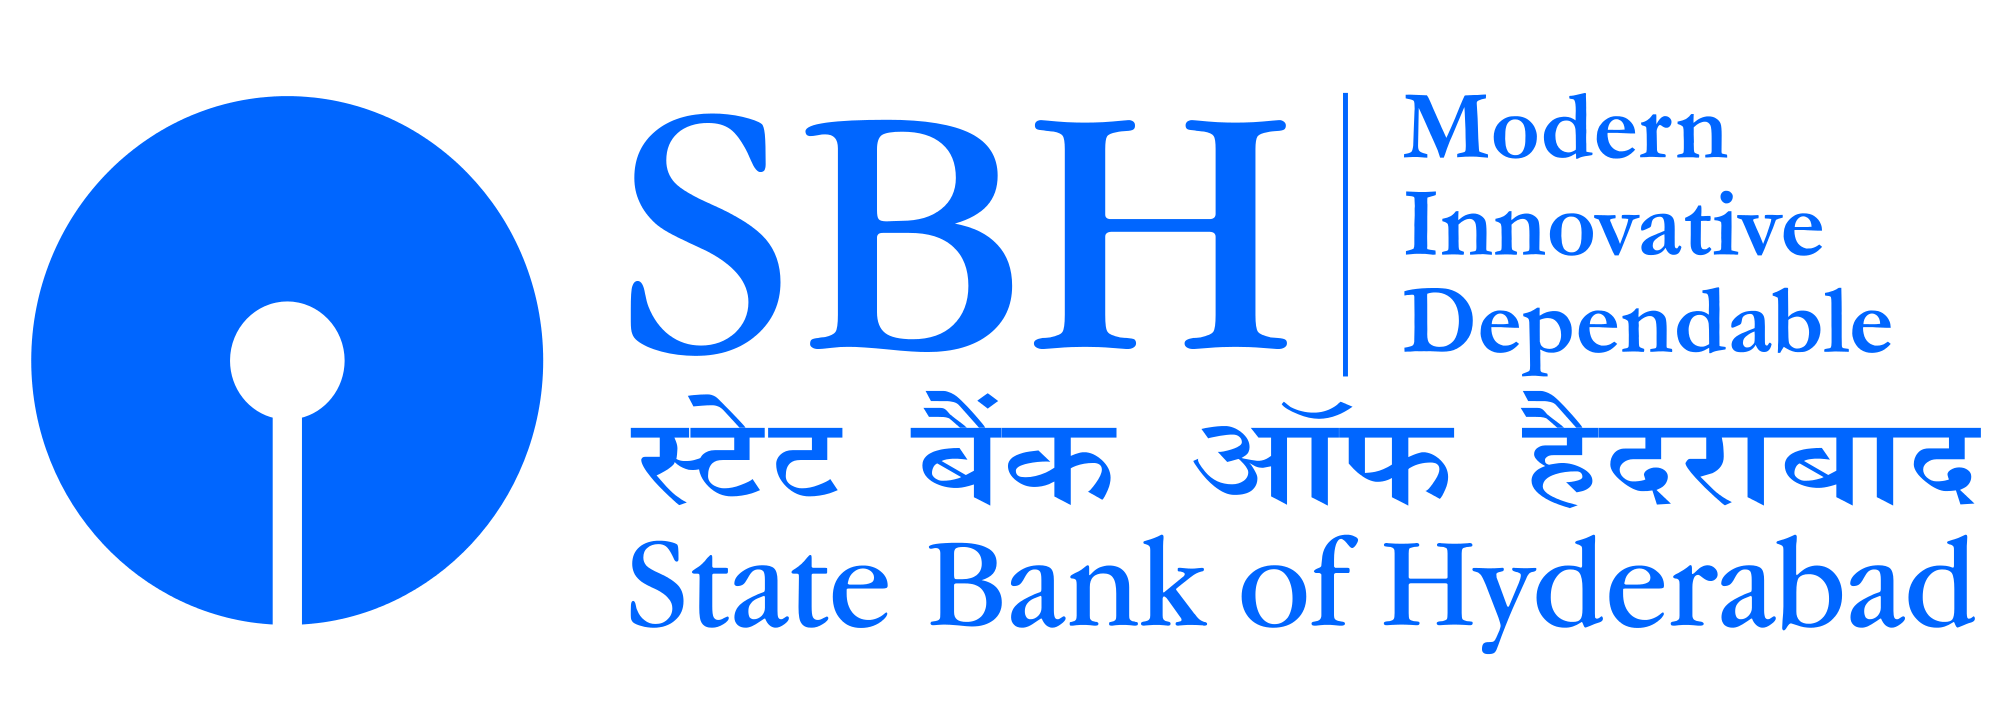 SBH Logo - State Bank of Hyderabad logo.svg